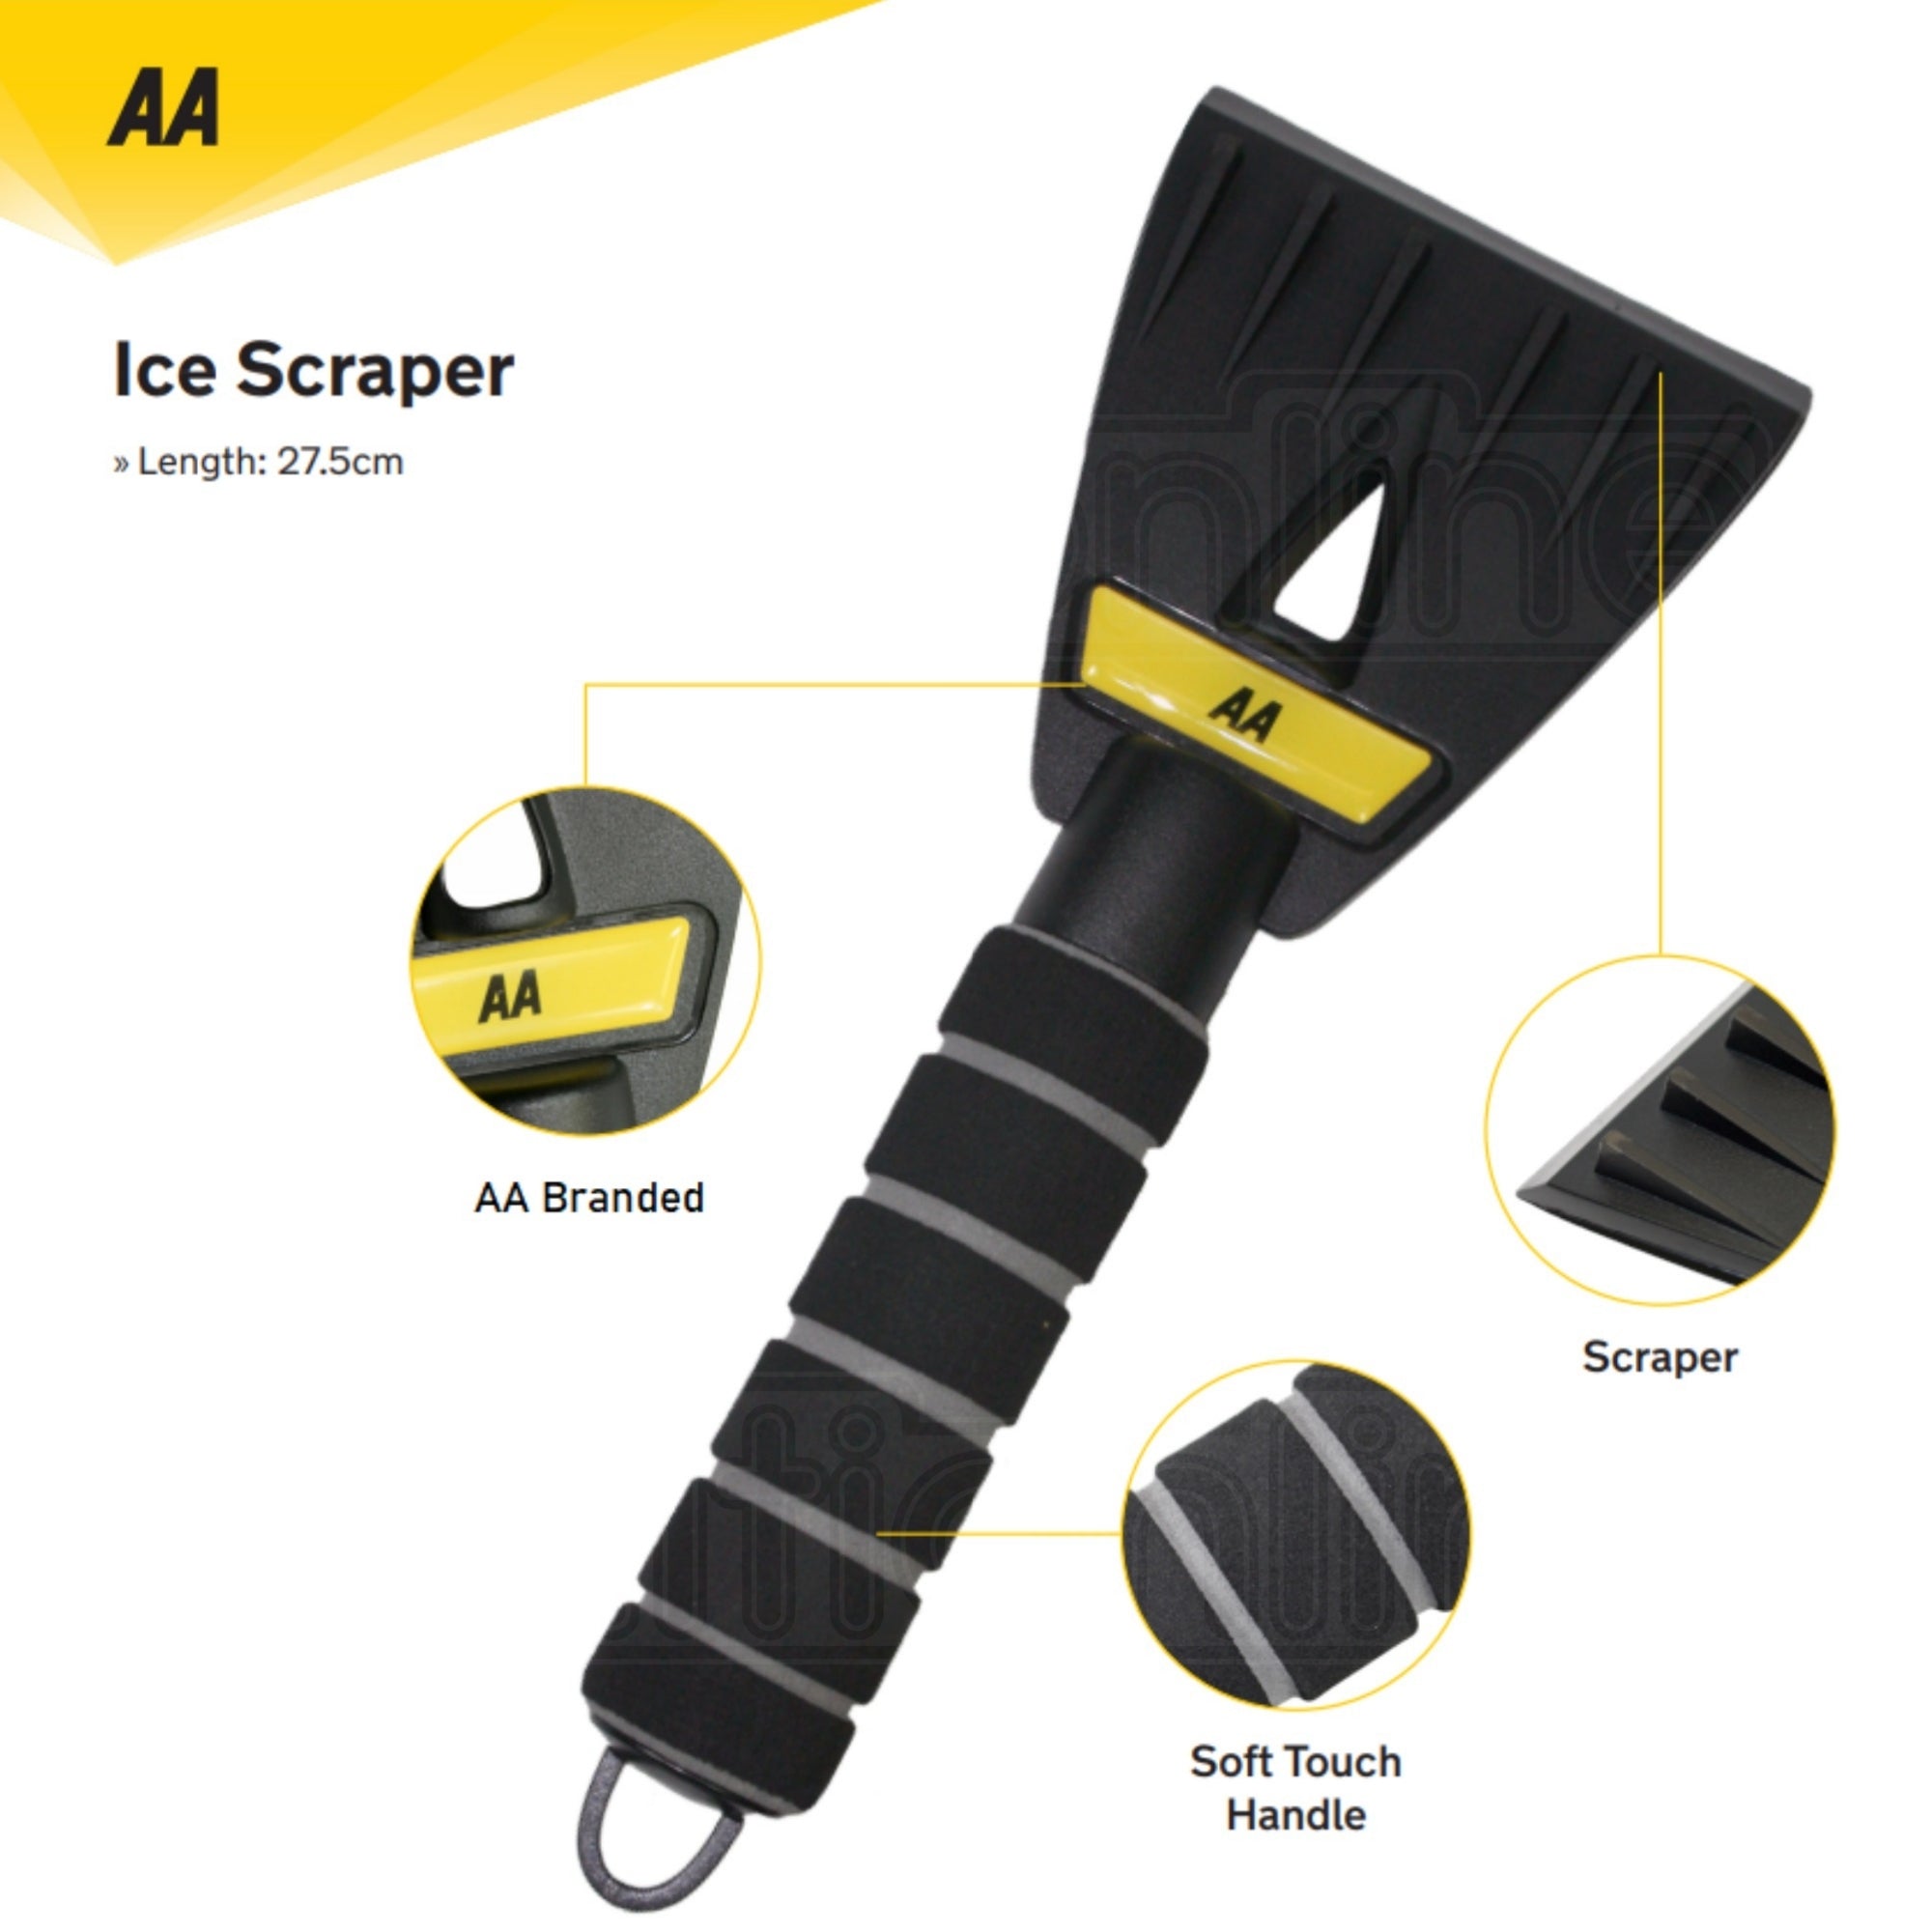 AA Ice Scraper